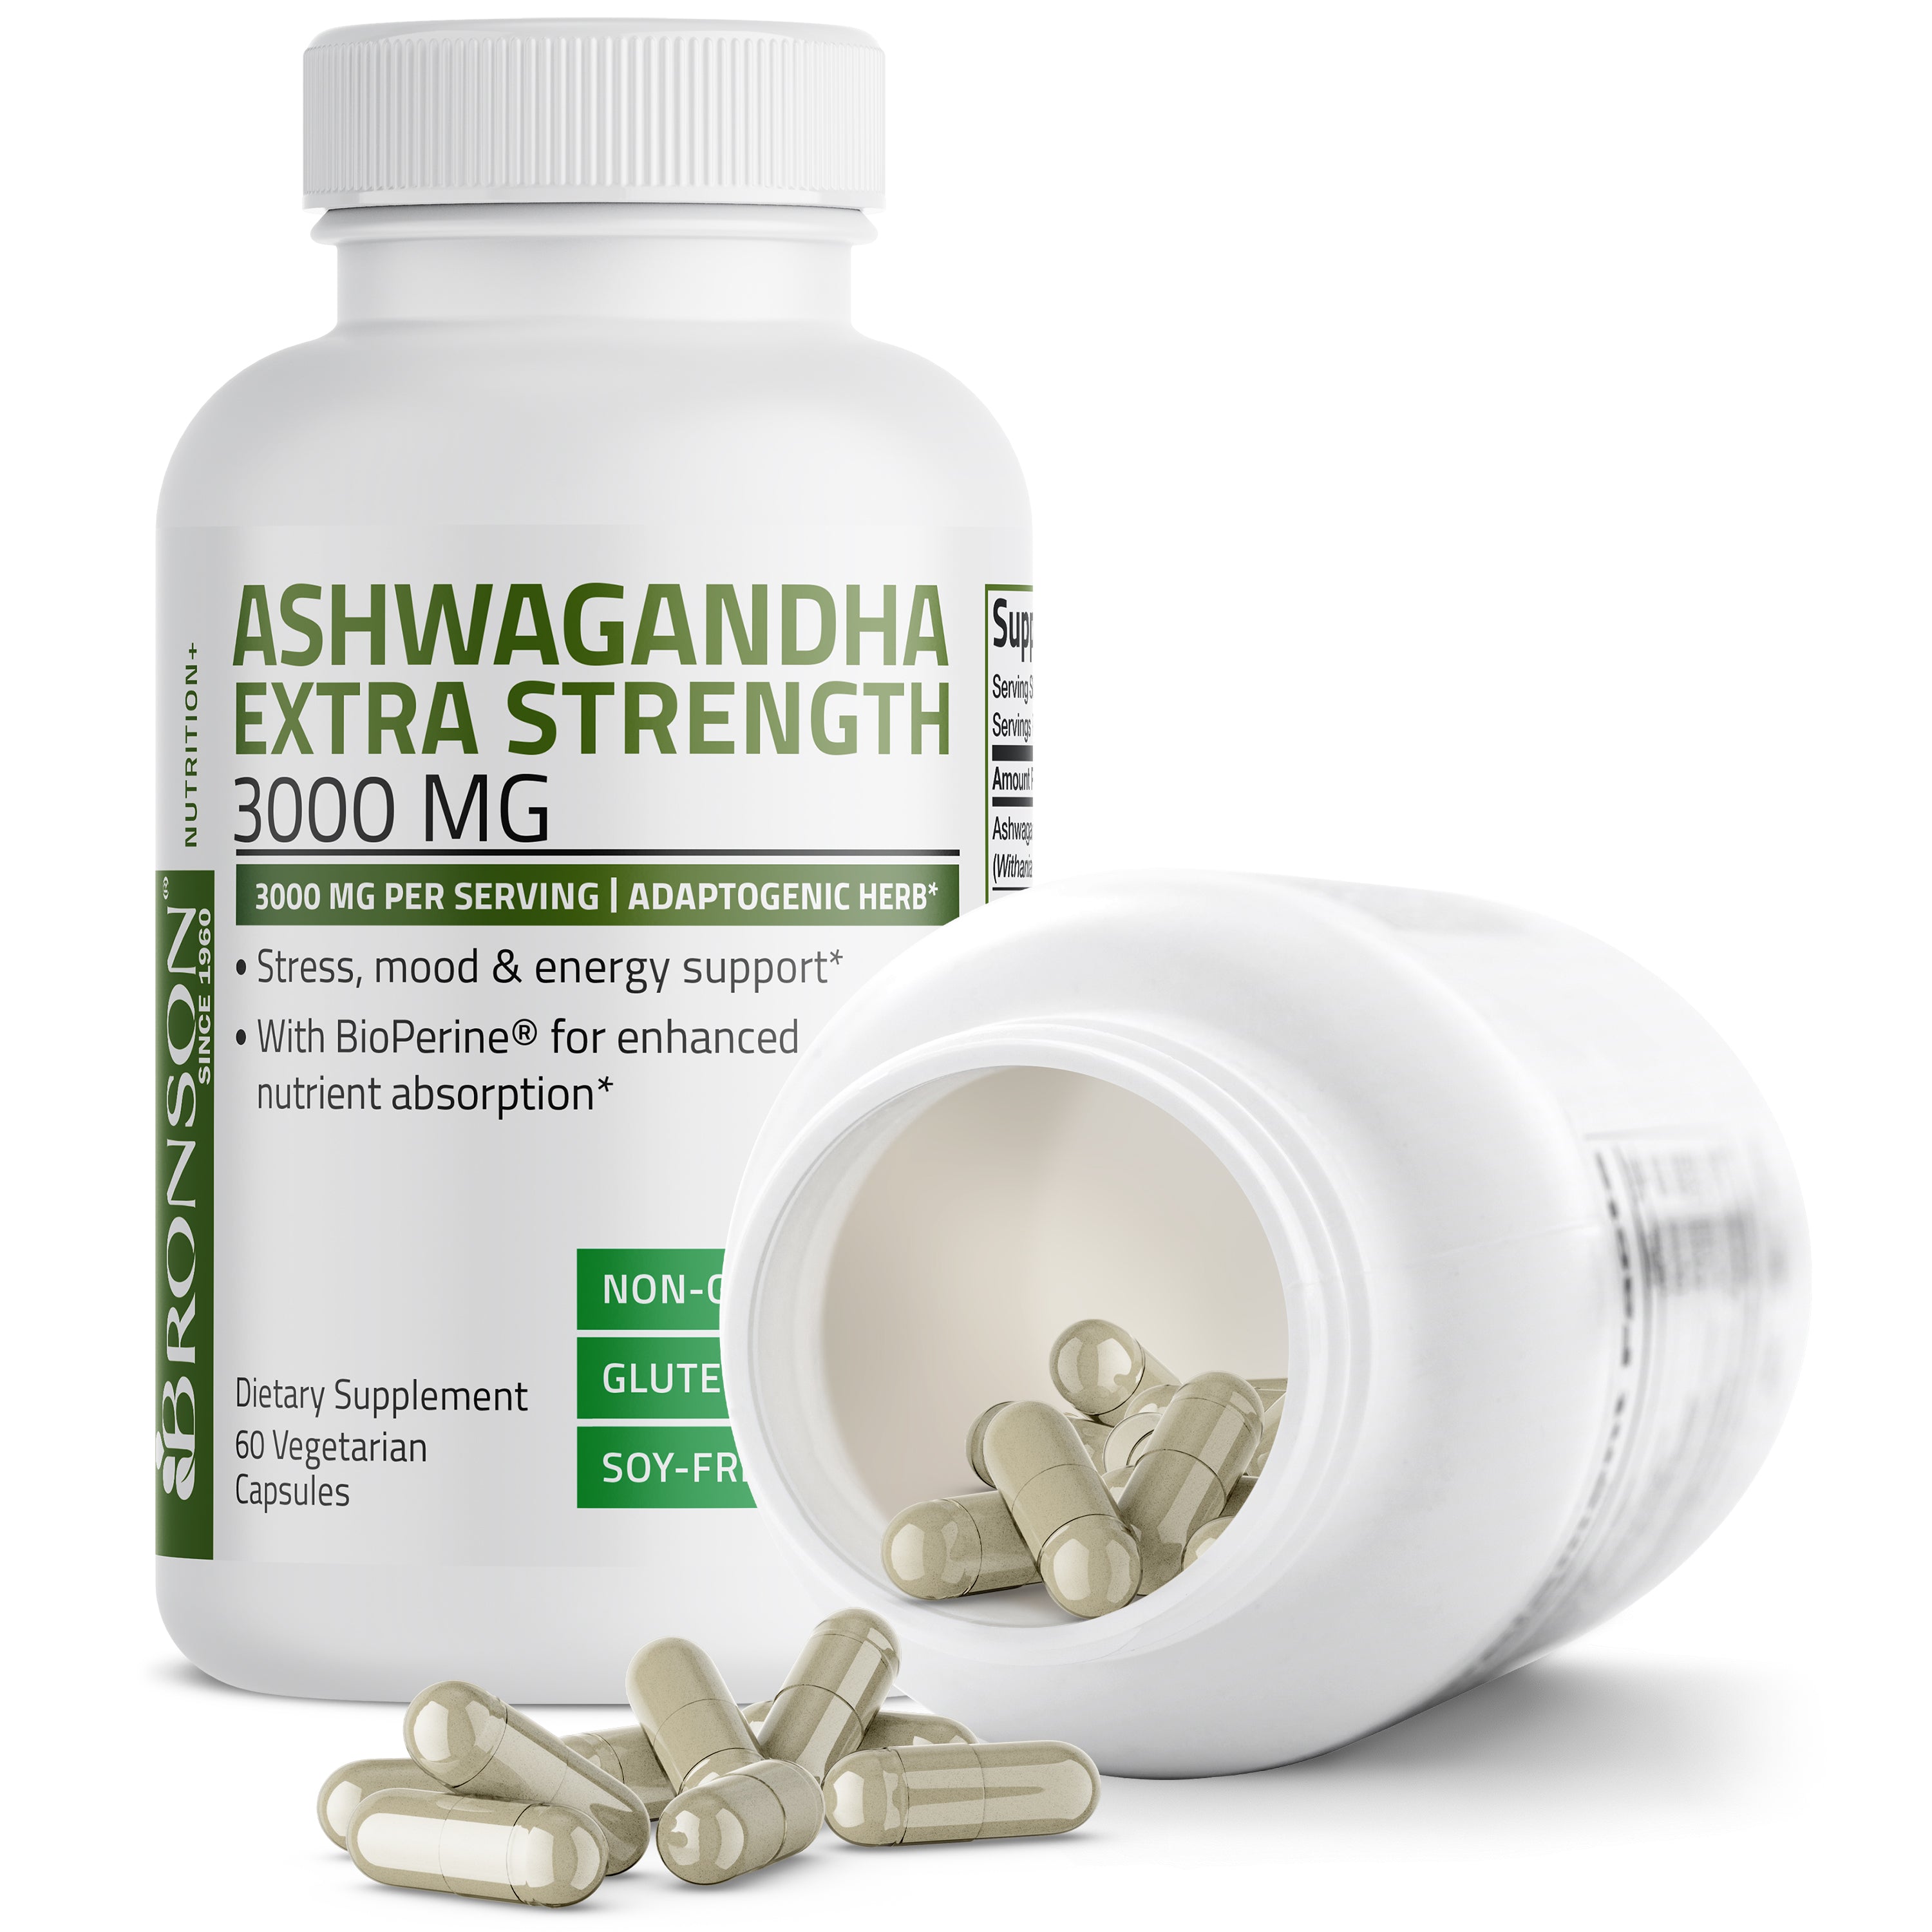 Ashwagandha Extra Strength - 3,000 mg view 4 of 6